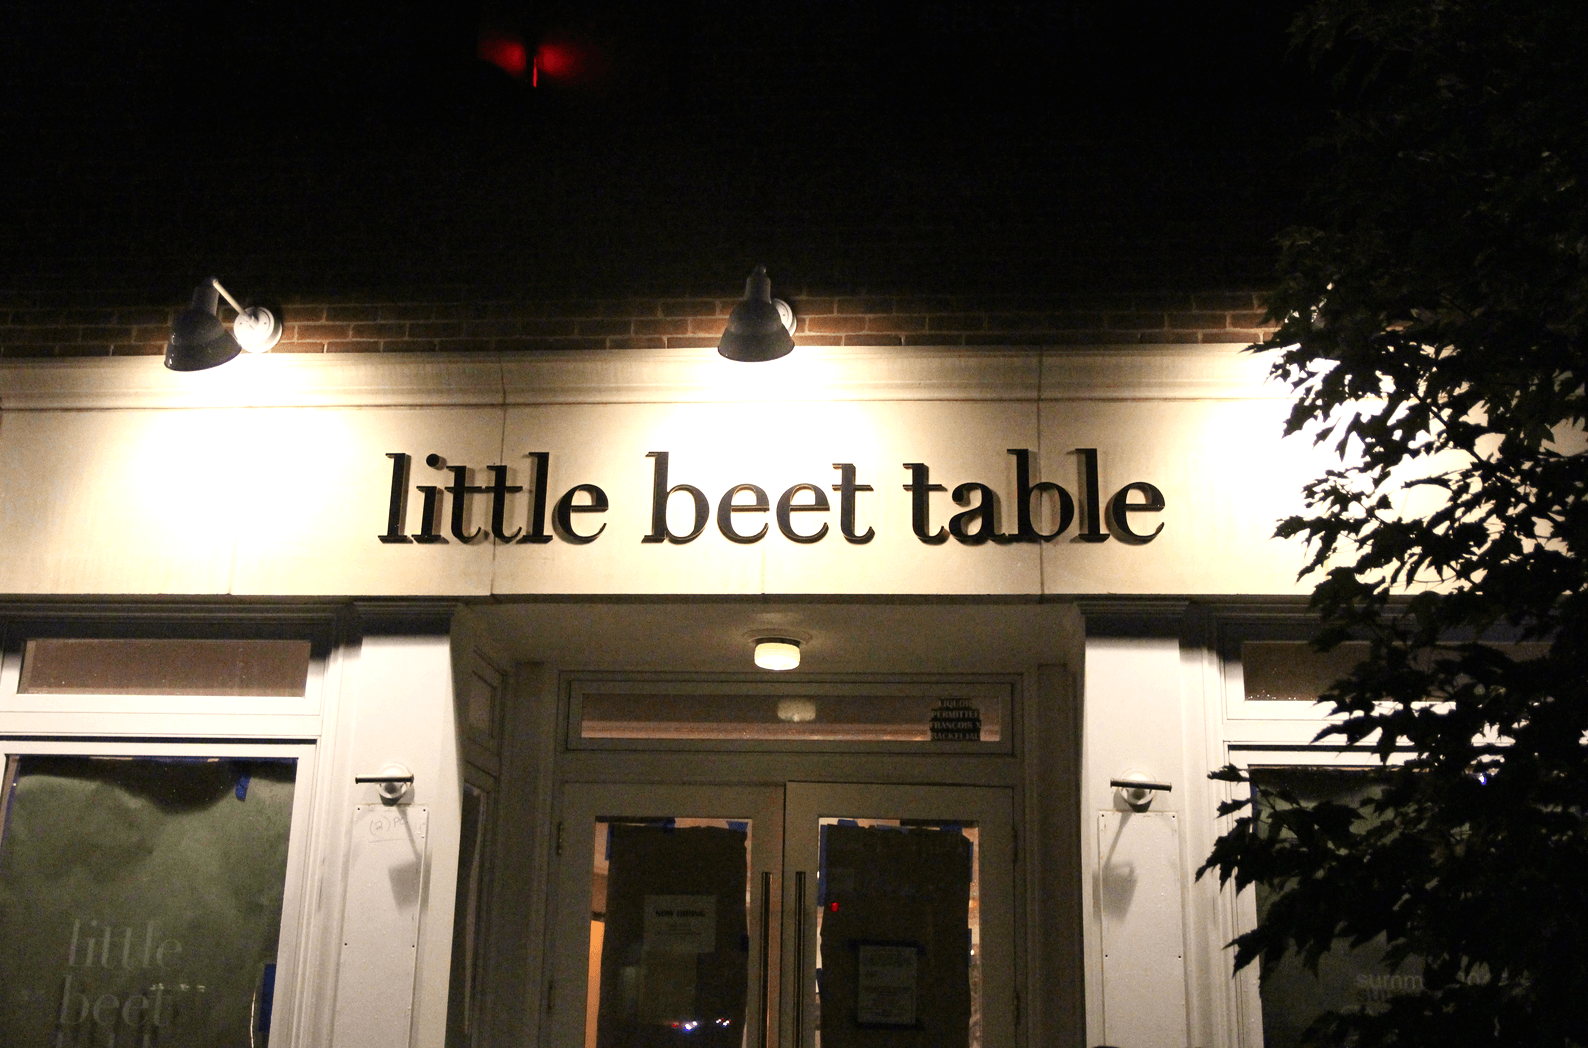 Little Beet Table. June 25, 2019 Photo: Leslie Yager